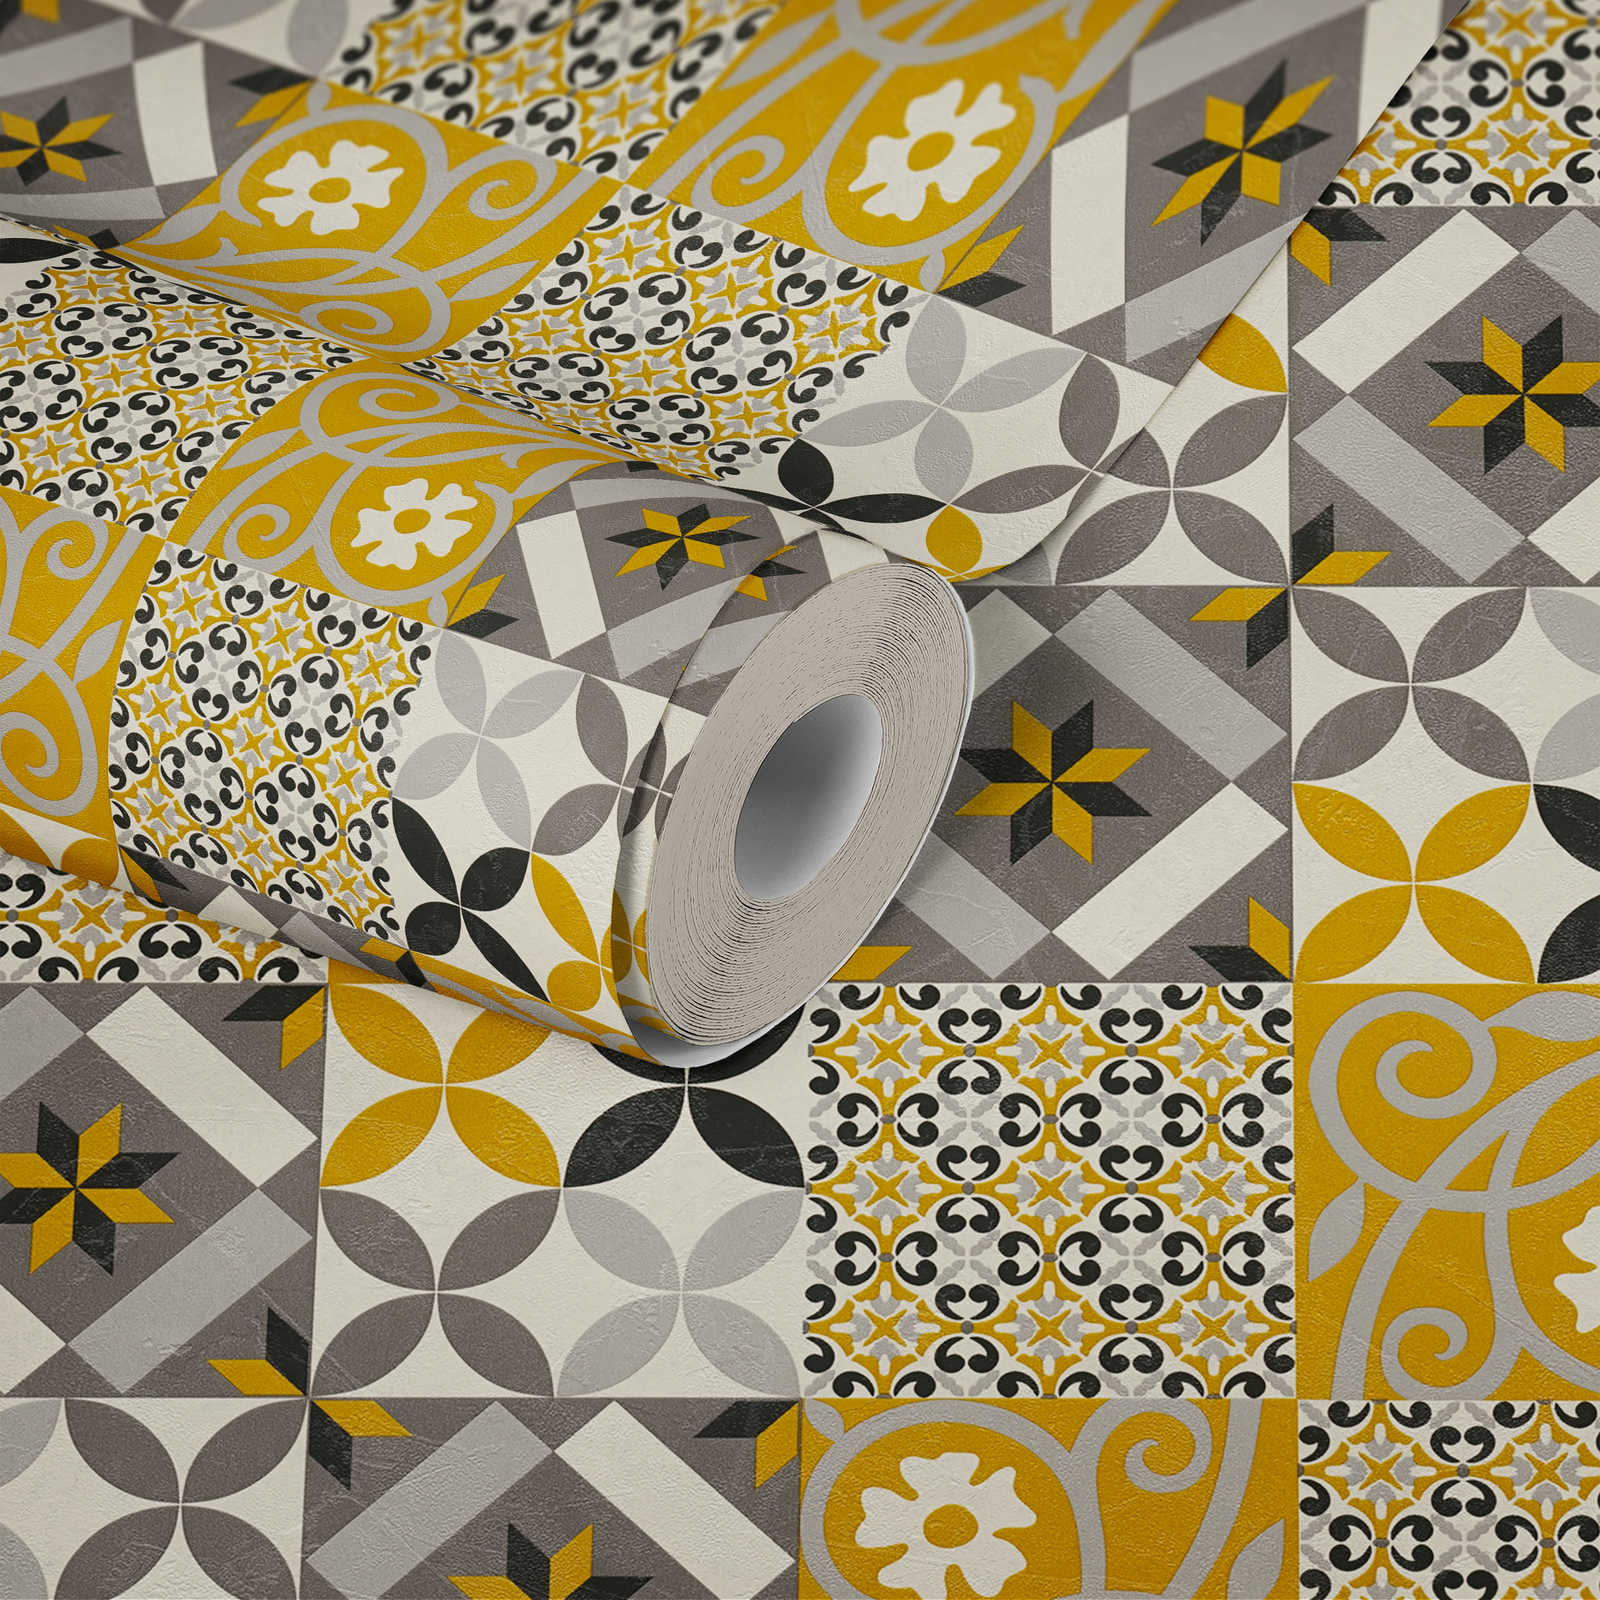             Wallpaper Decor tiles & floral pattern - black, yellow, anthracite
        